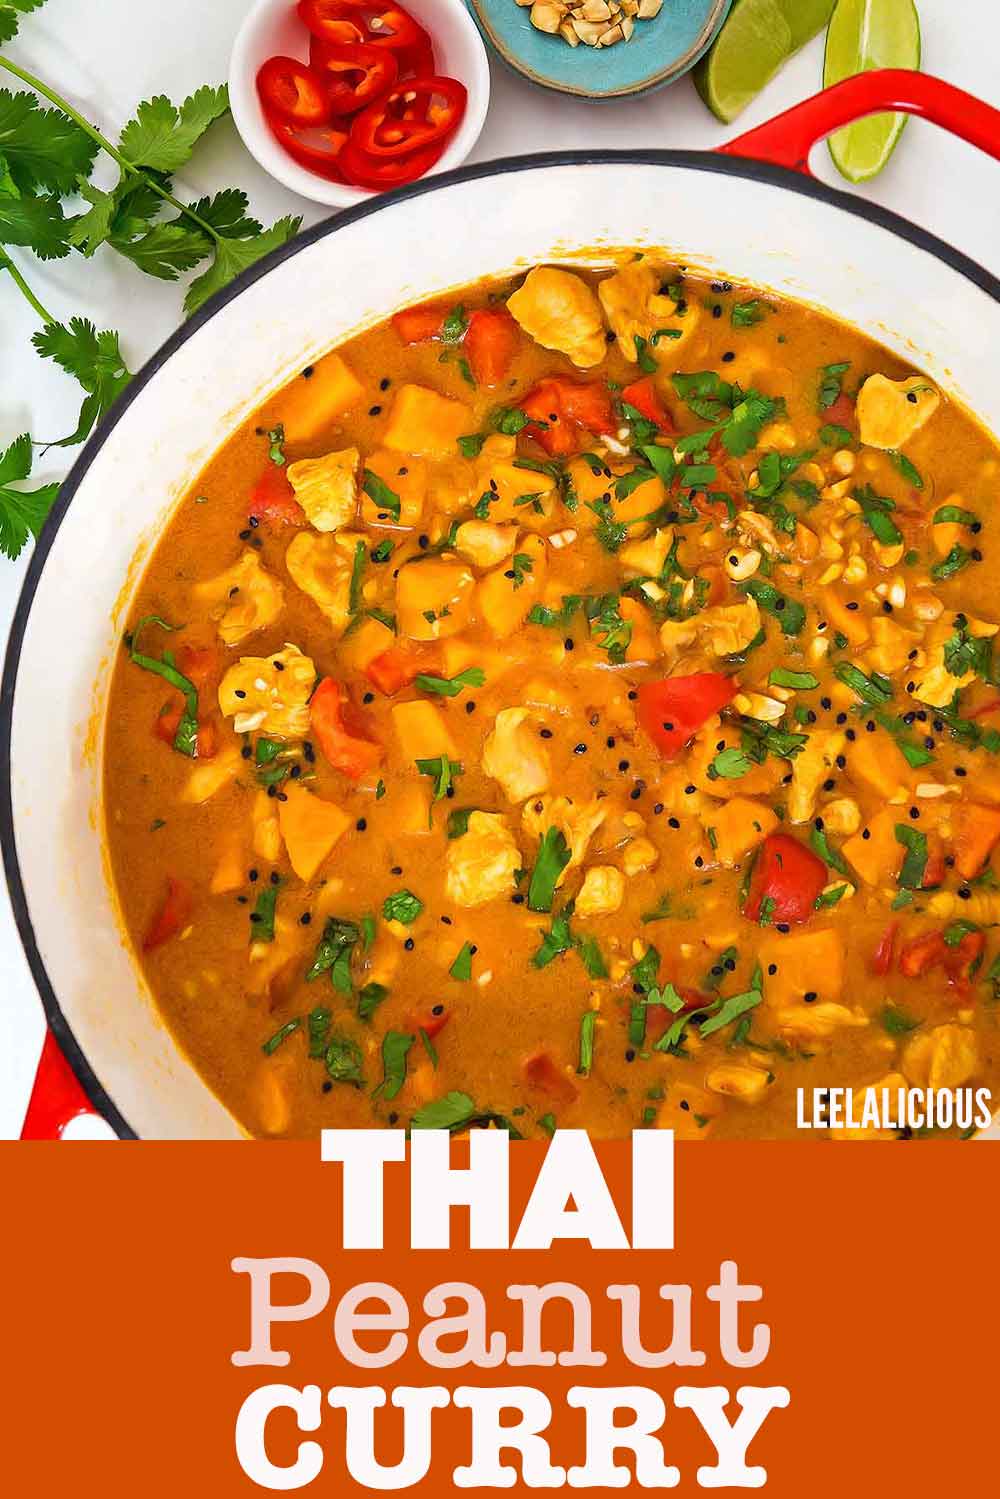 Thai Peanut Curry Recipe » LeelaLicious